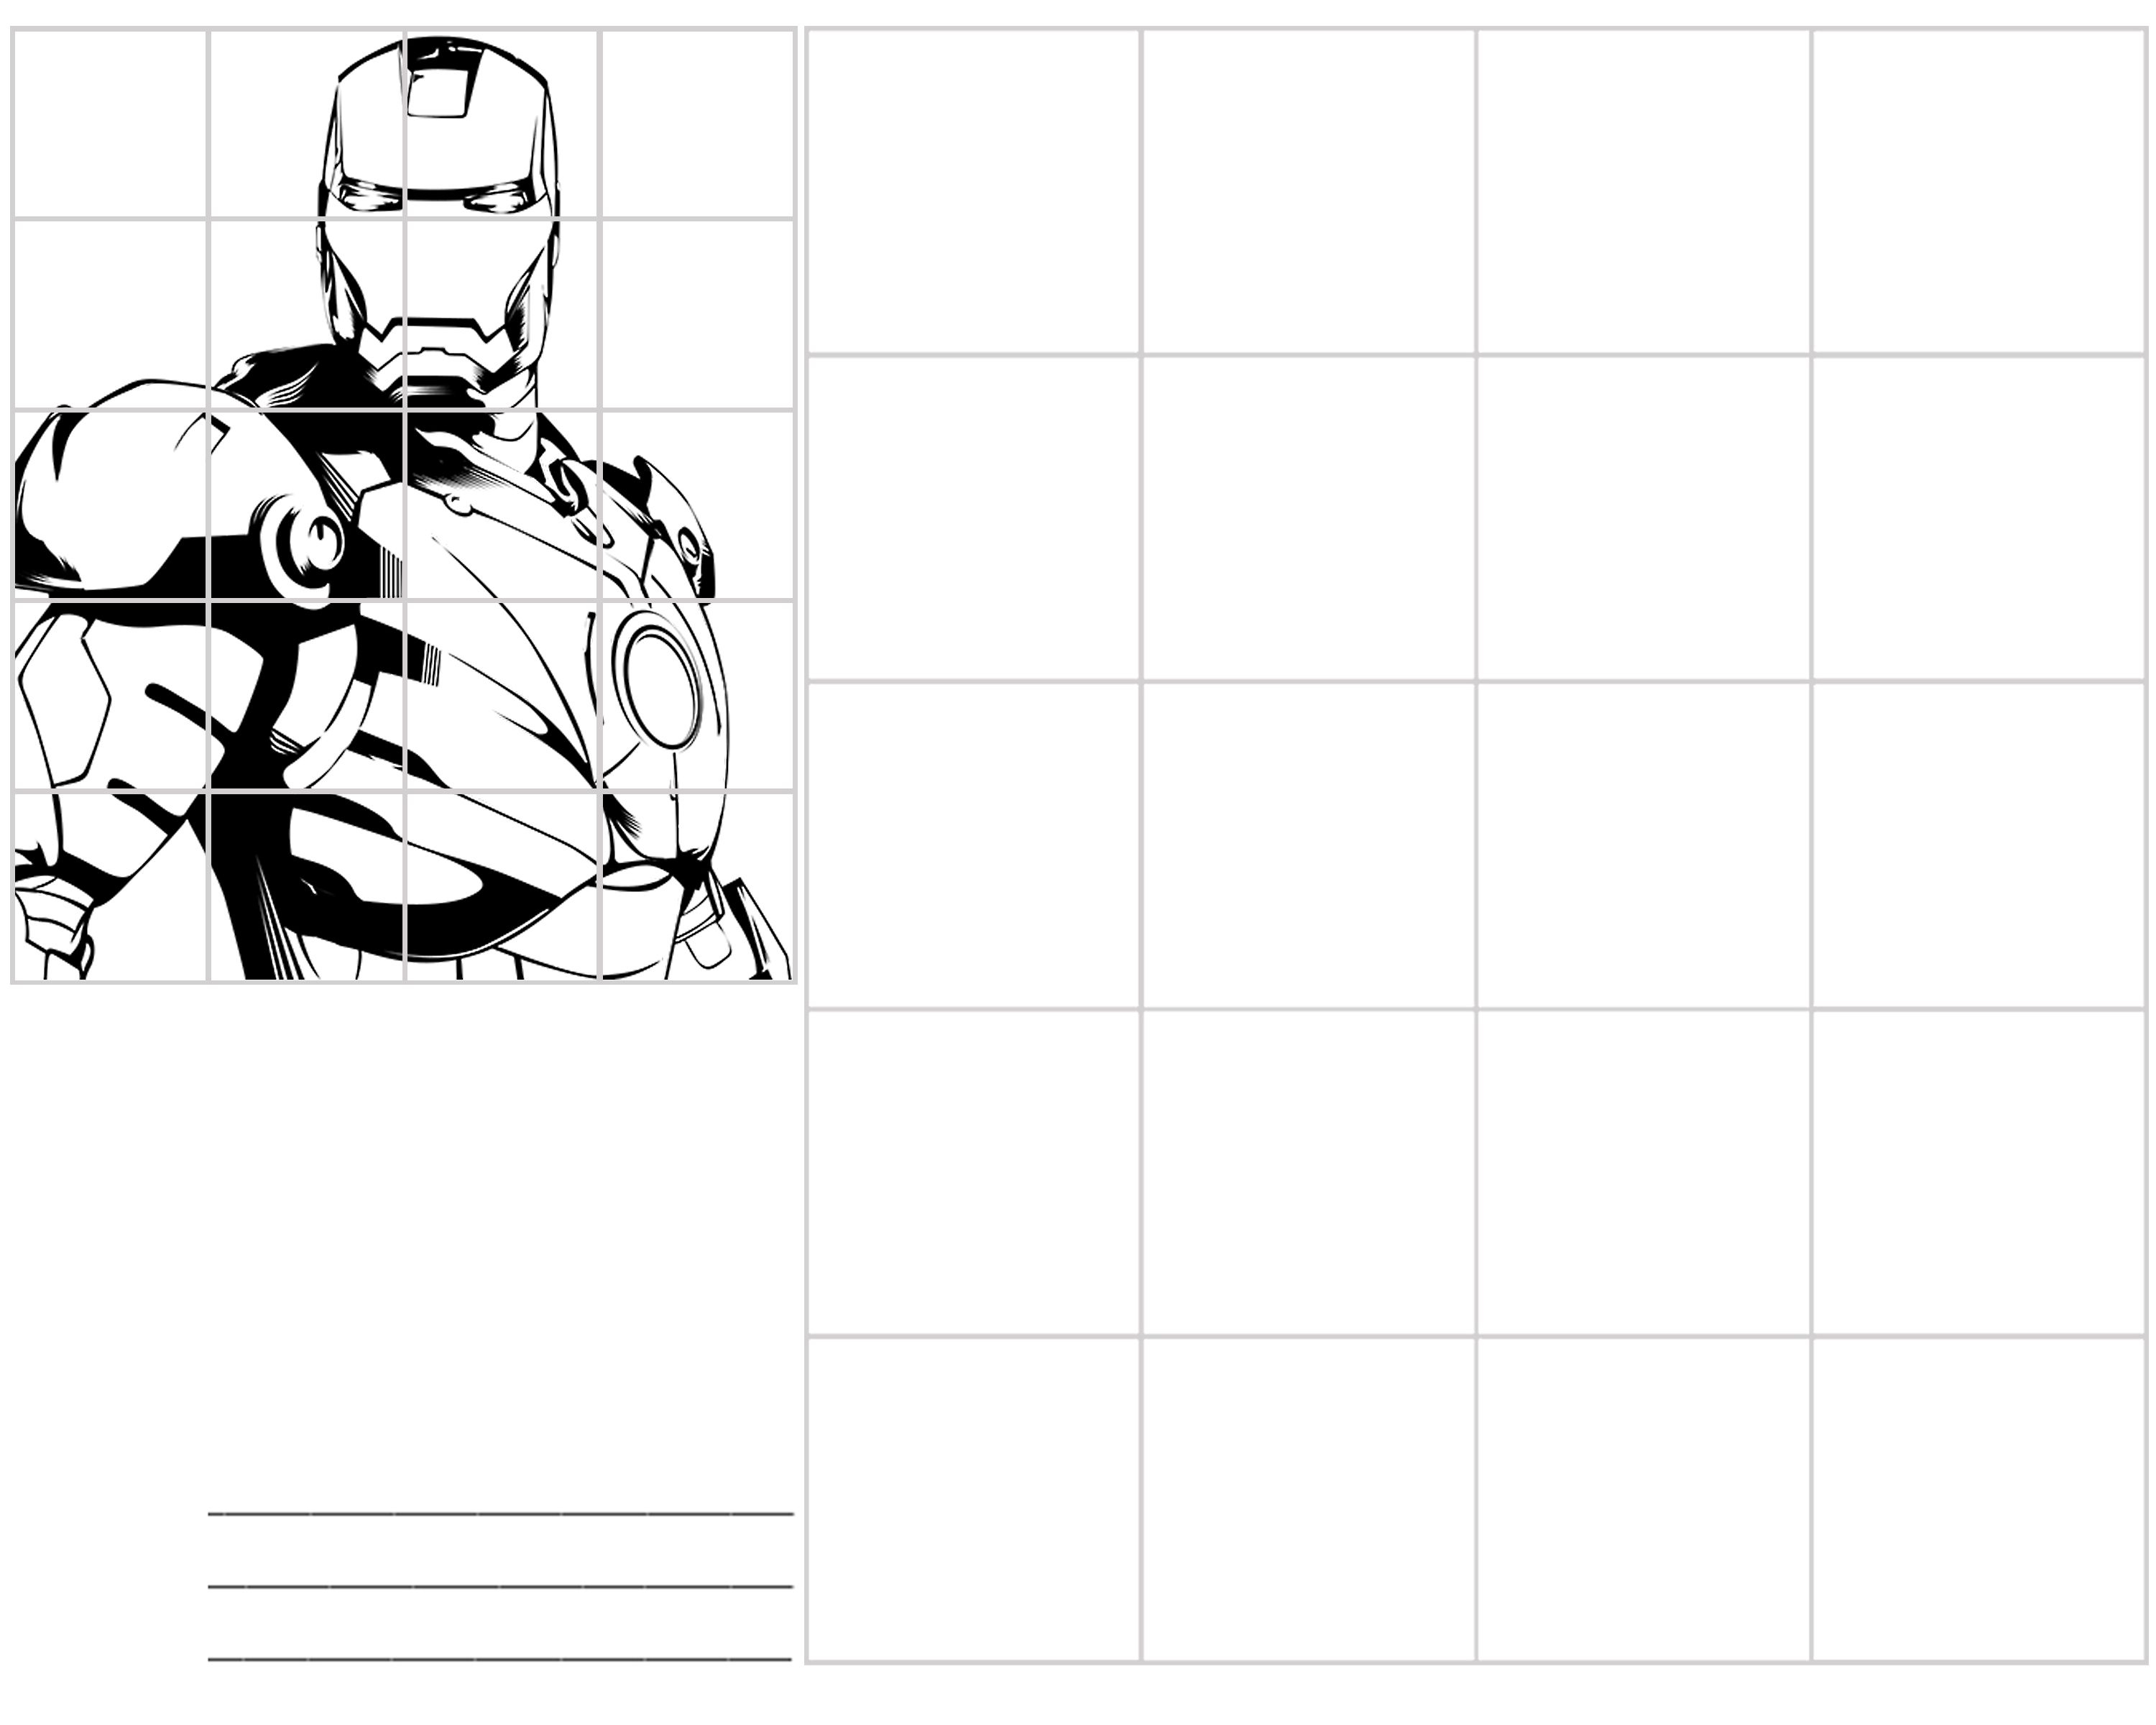 grid-drawing-worksheets-pdf-grid-drawing-worksheets-pdf-at